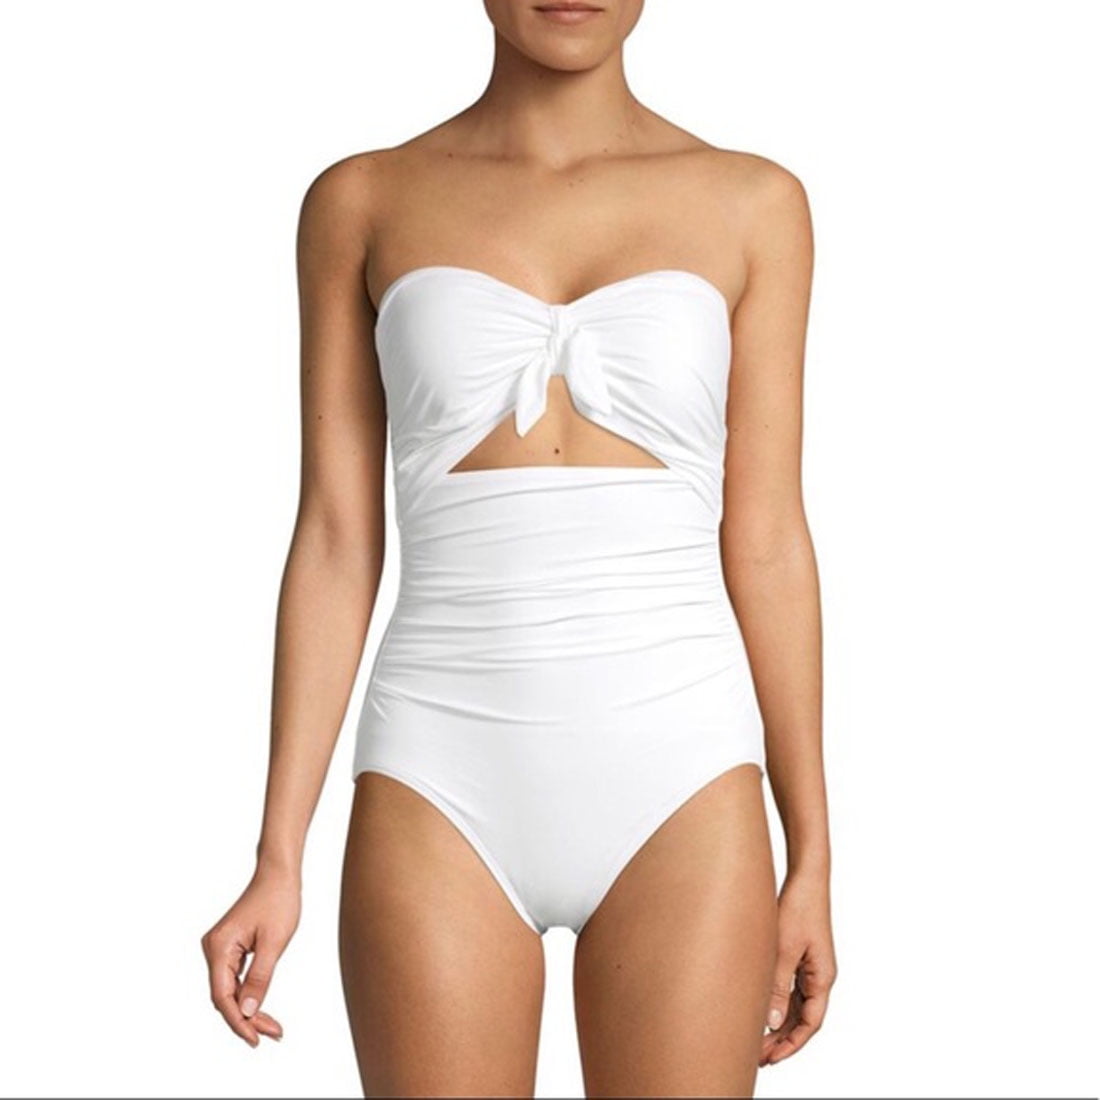 Kate Spade New York Grove Beach Tie Bandeau One-Piece Swimsuit, White,  Medium 